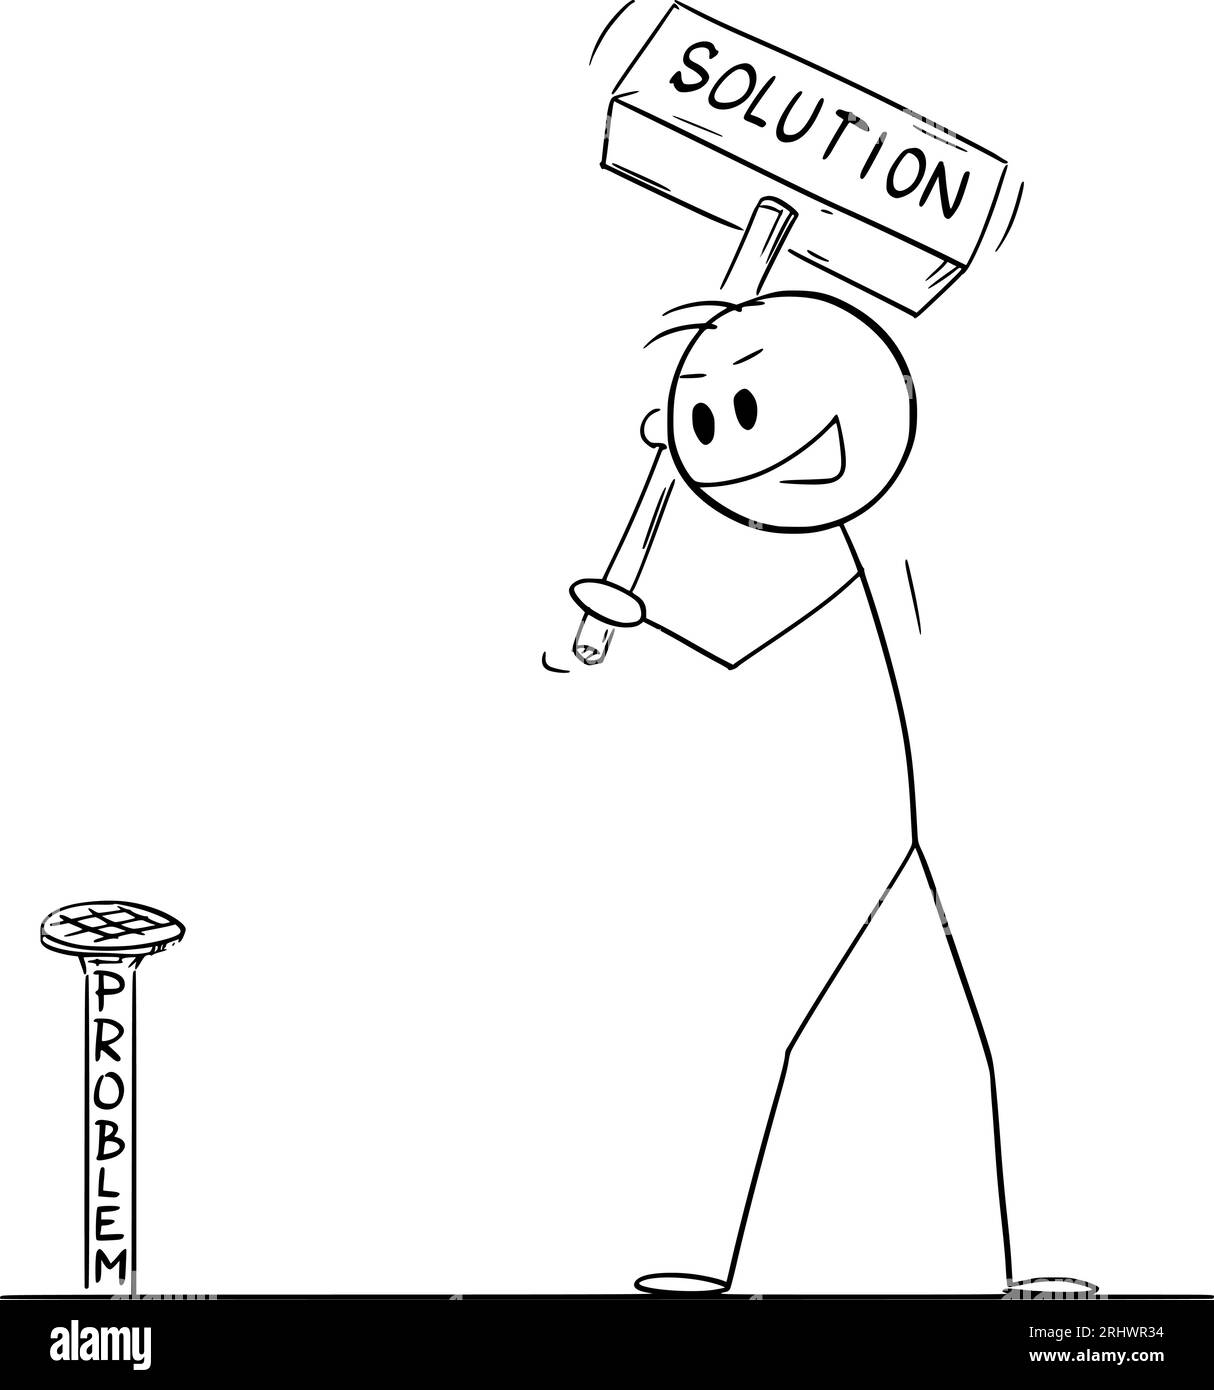 Problem and Solution, Vector Cartoon Stick Figure Illustration Stock Vector